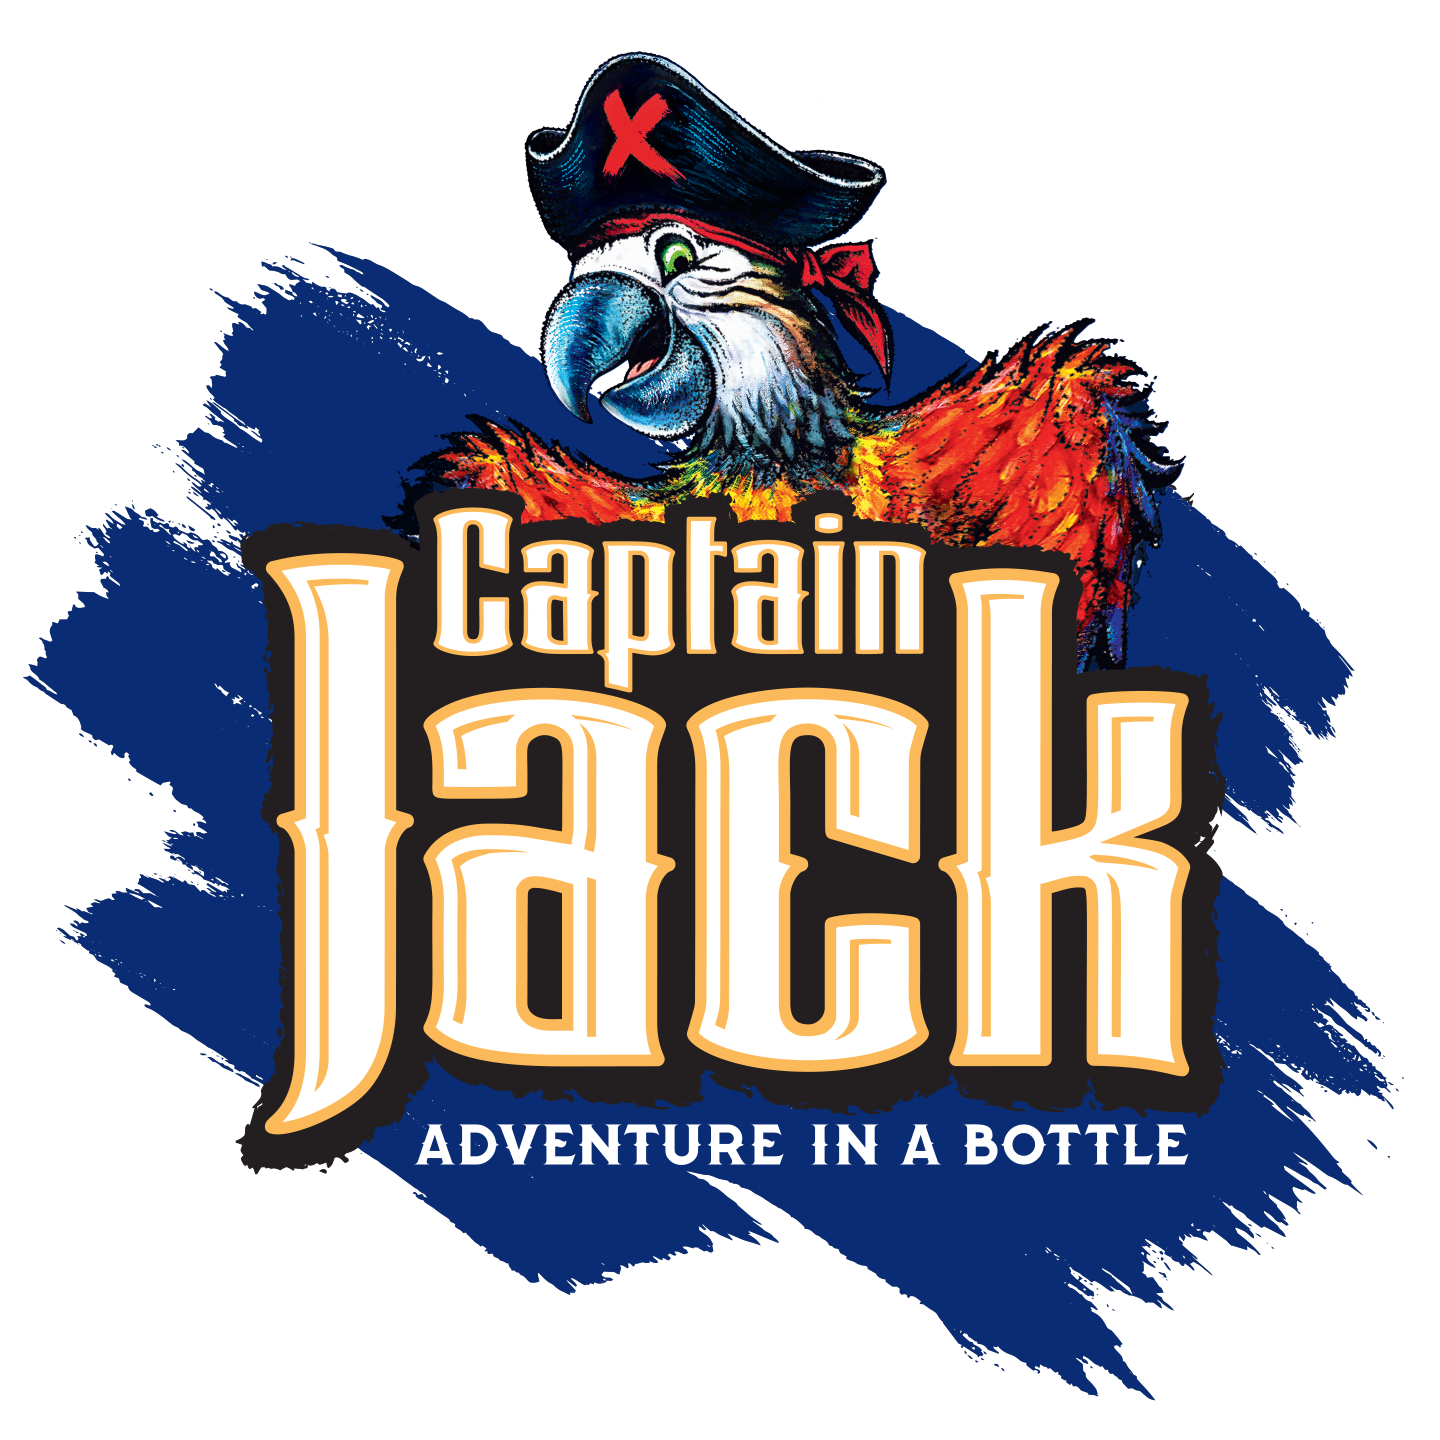 Capitan Jack